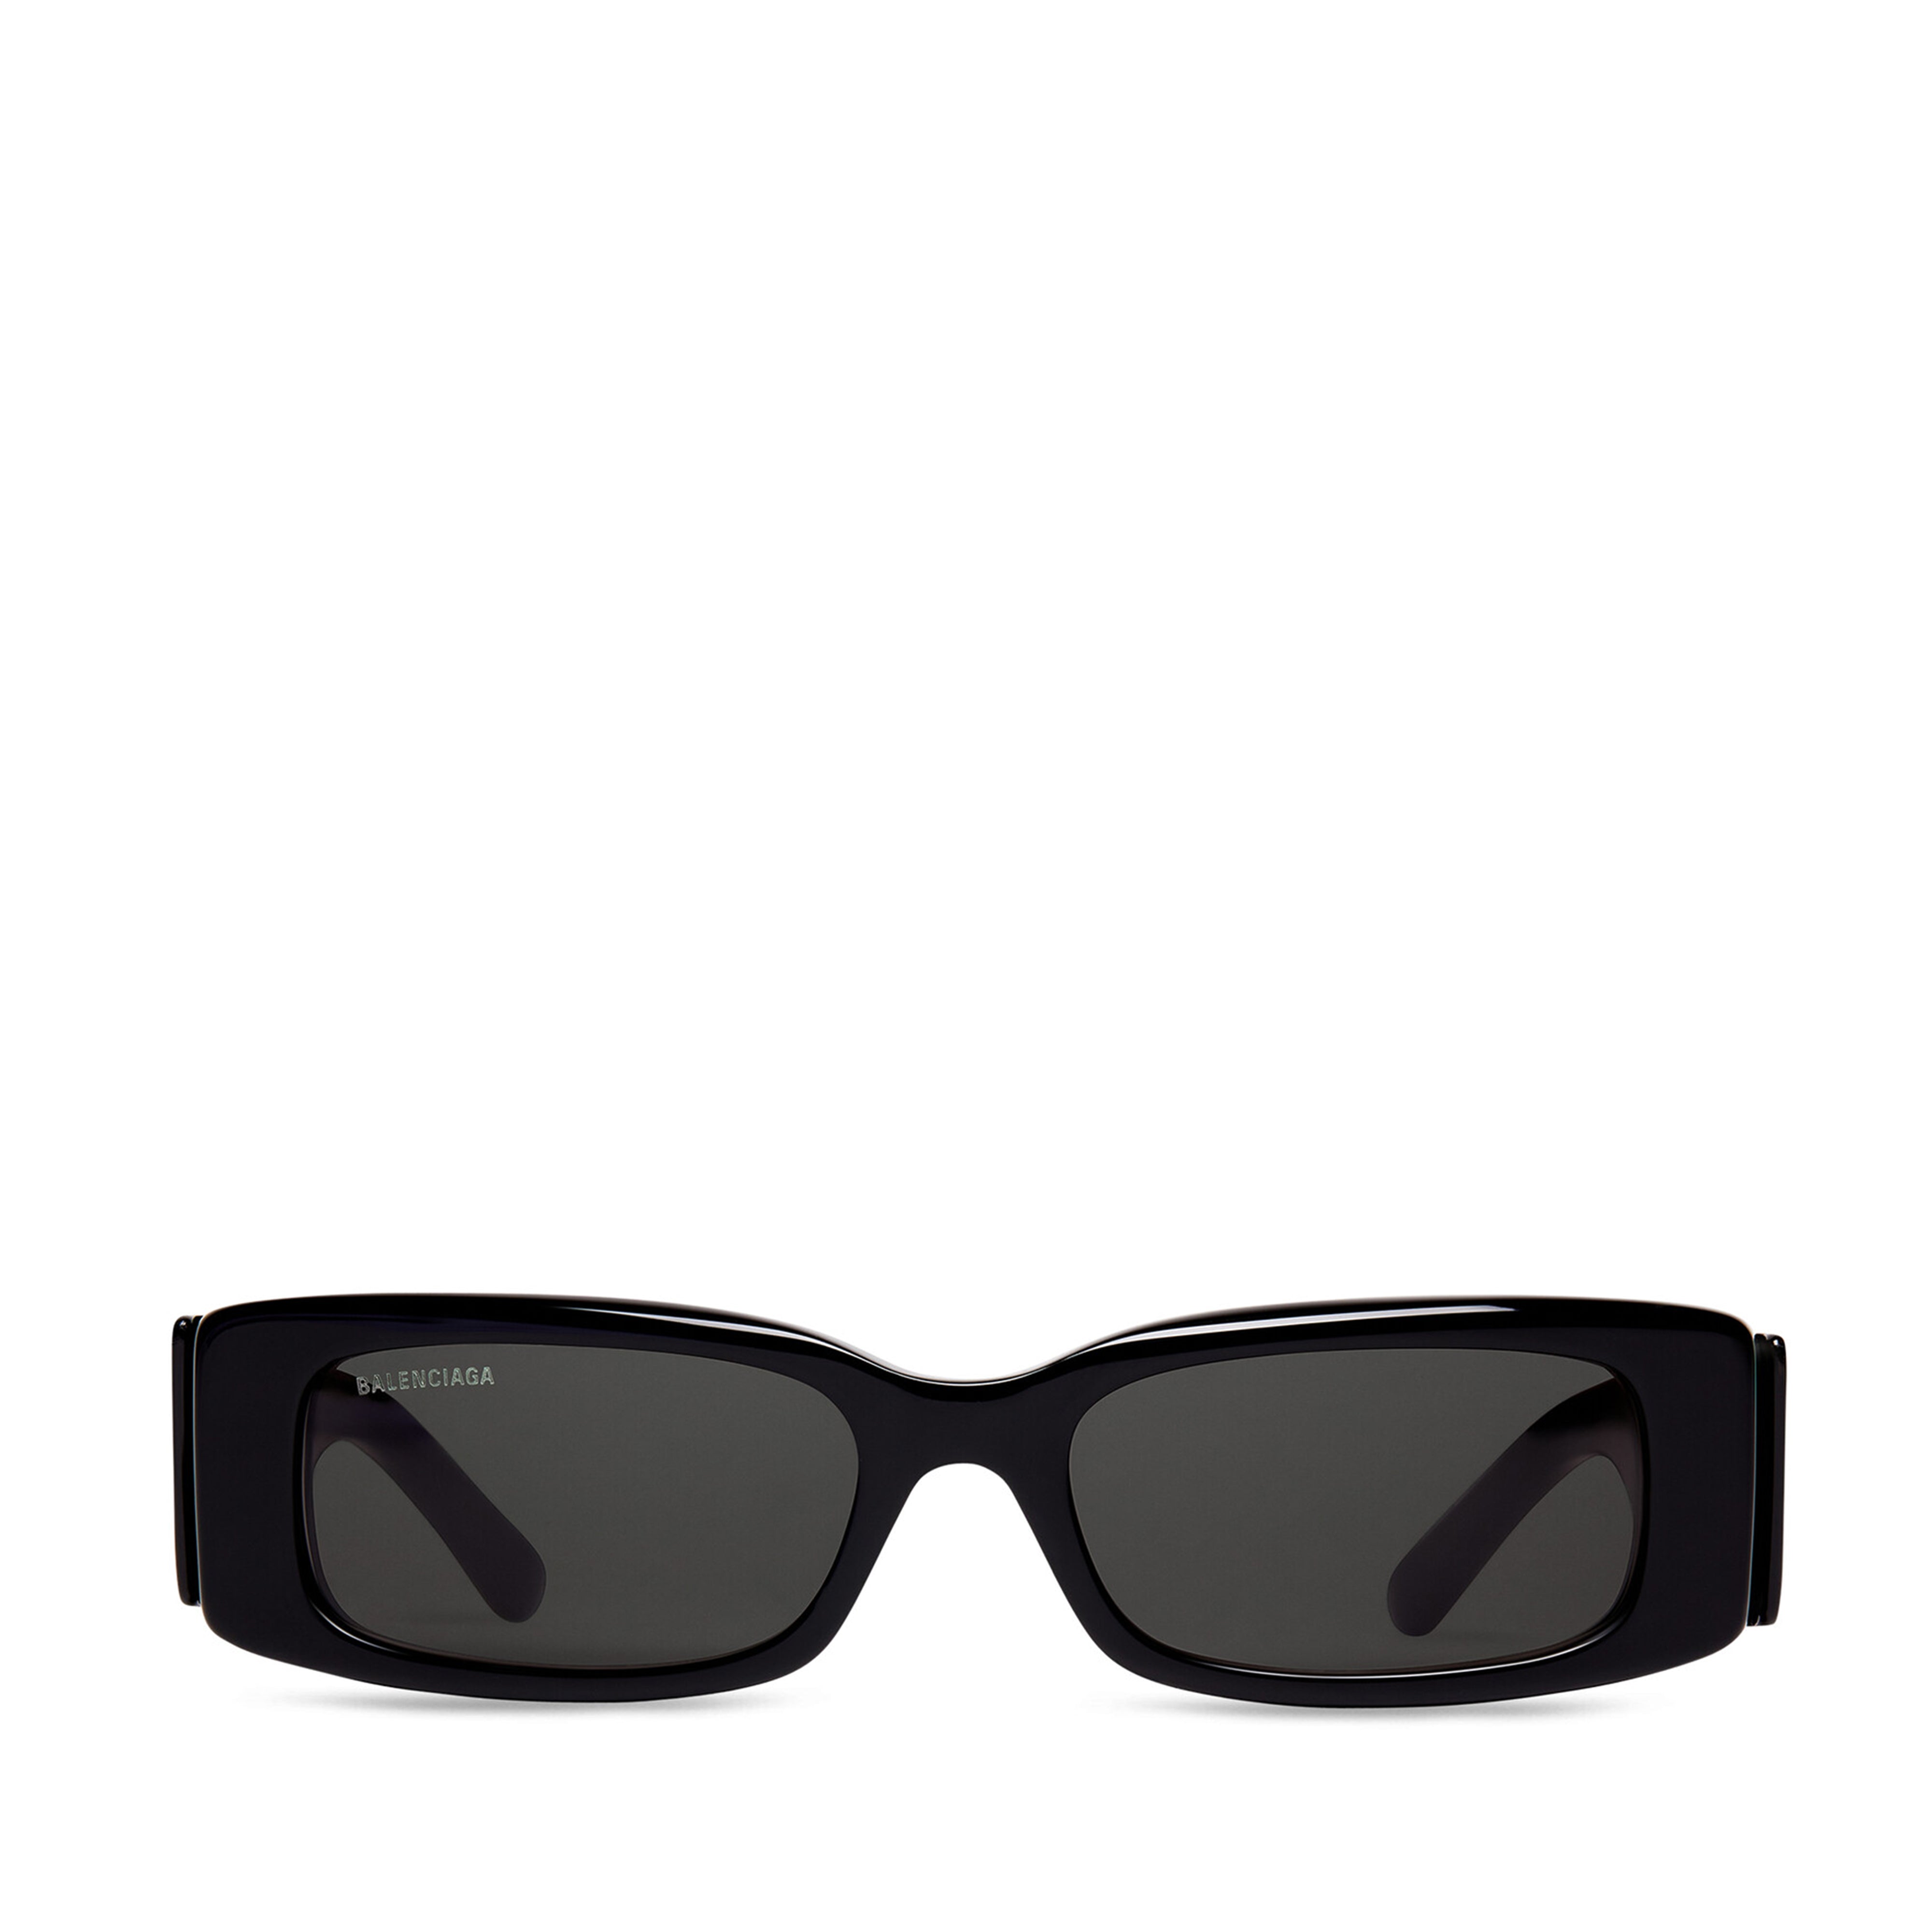 BALENCIAGA EYEWEAR Cateye acetate sunglasses  NETAPORTER